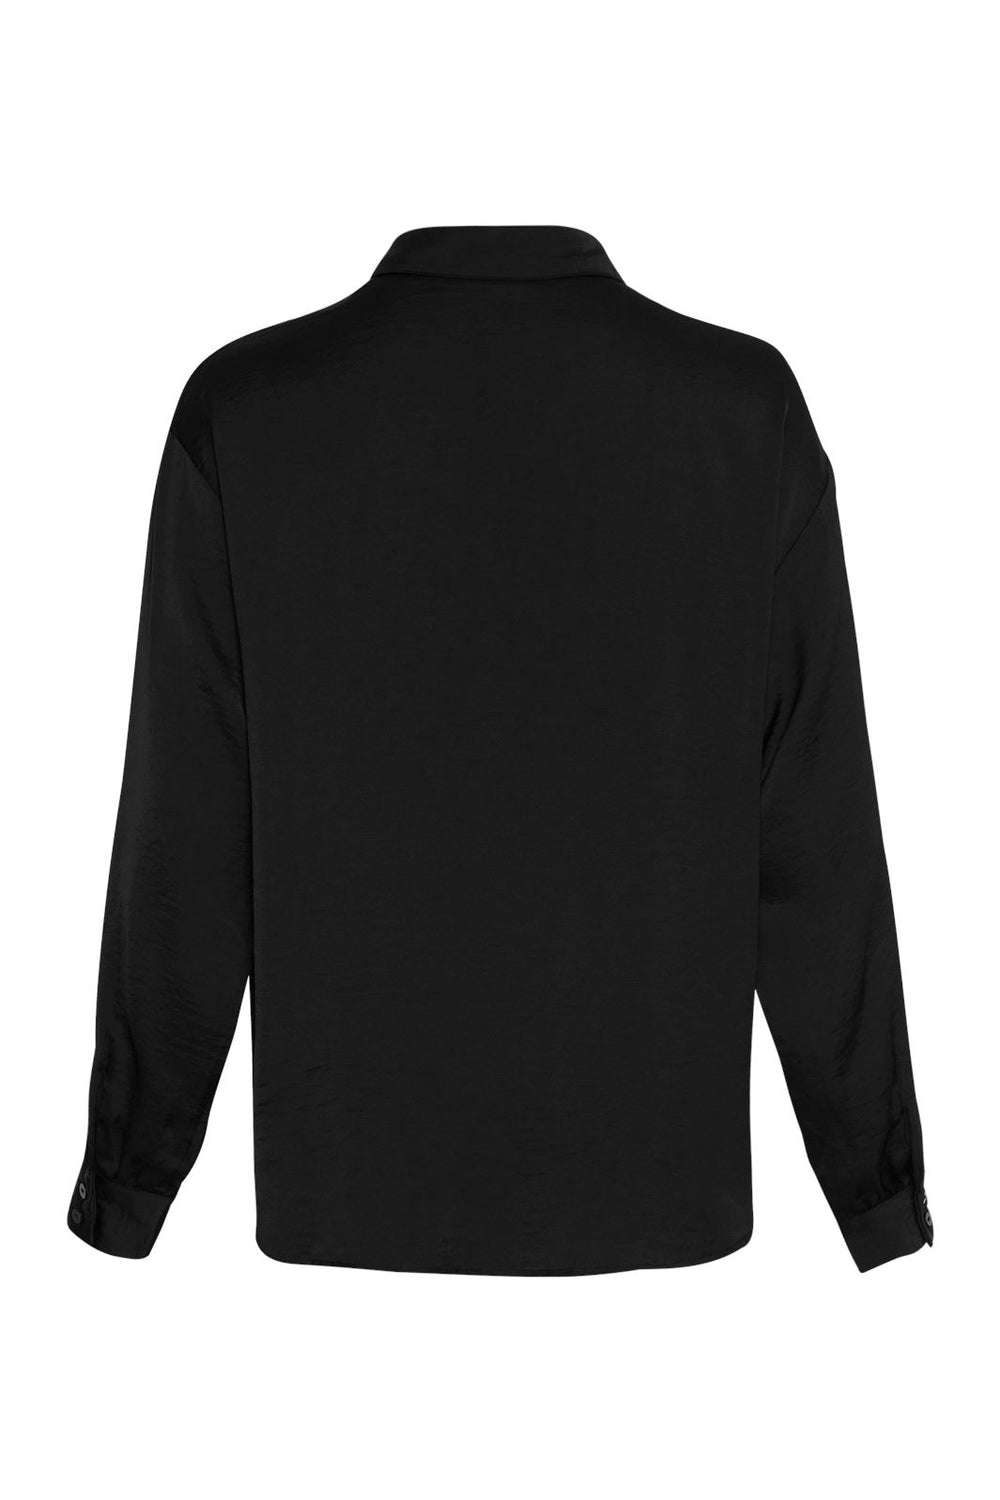 Moss Copenhagen - Mschsandeline Maluca Shirt - Black